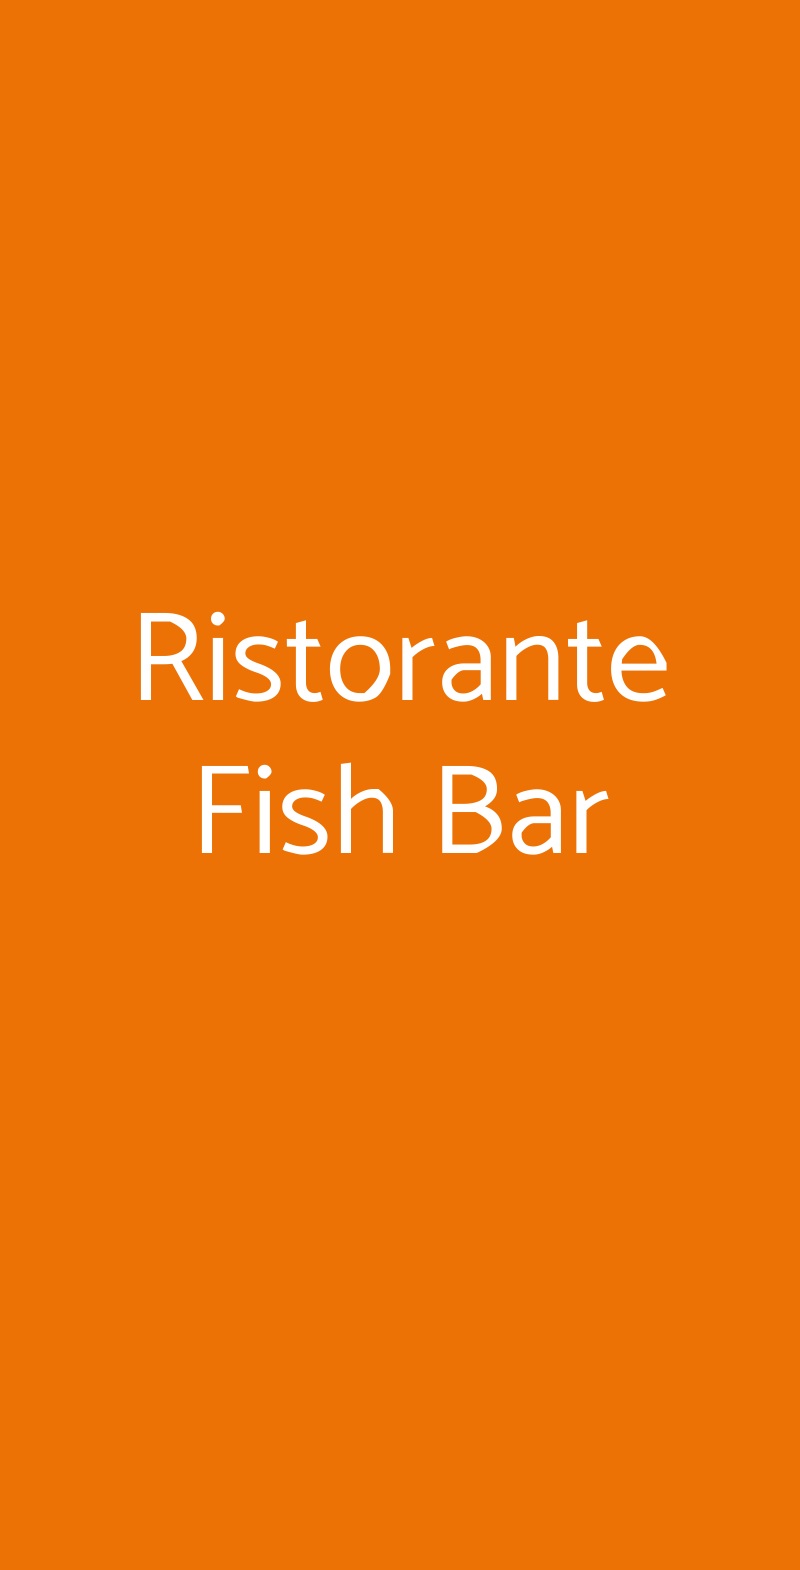 Ristorante Fish Bar Rimini menù 1 pagina